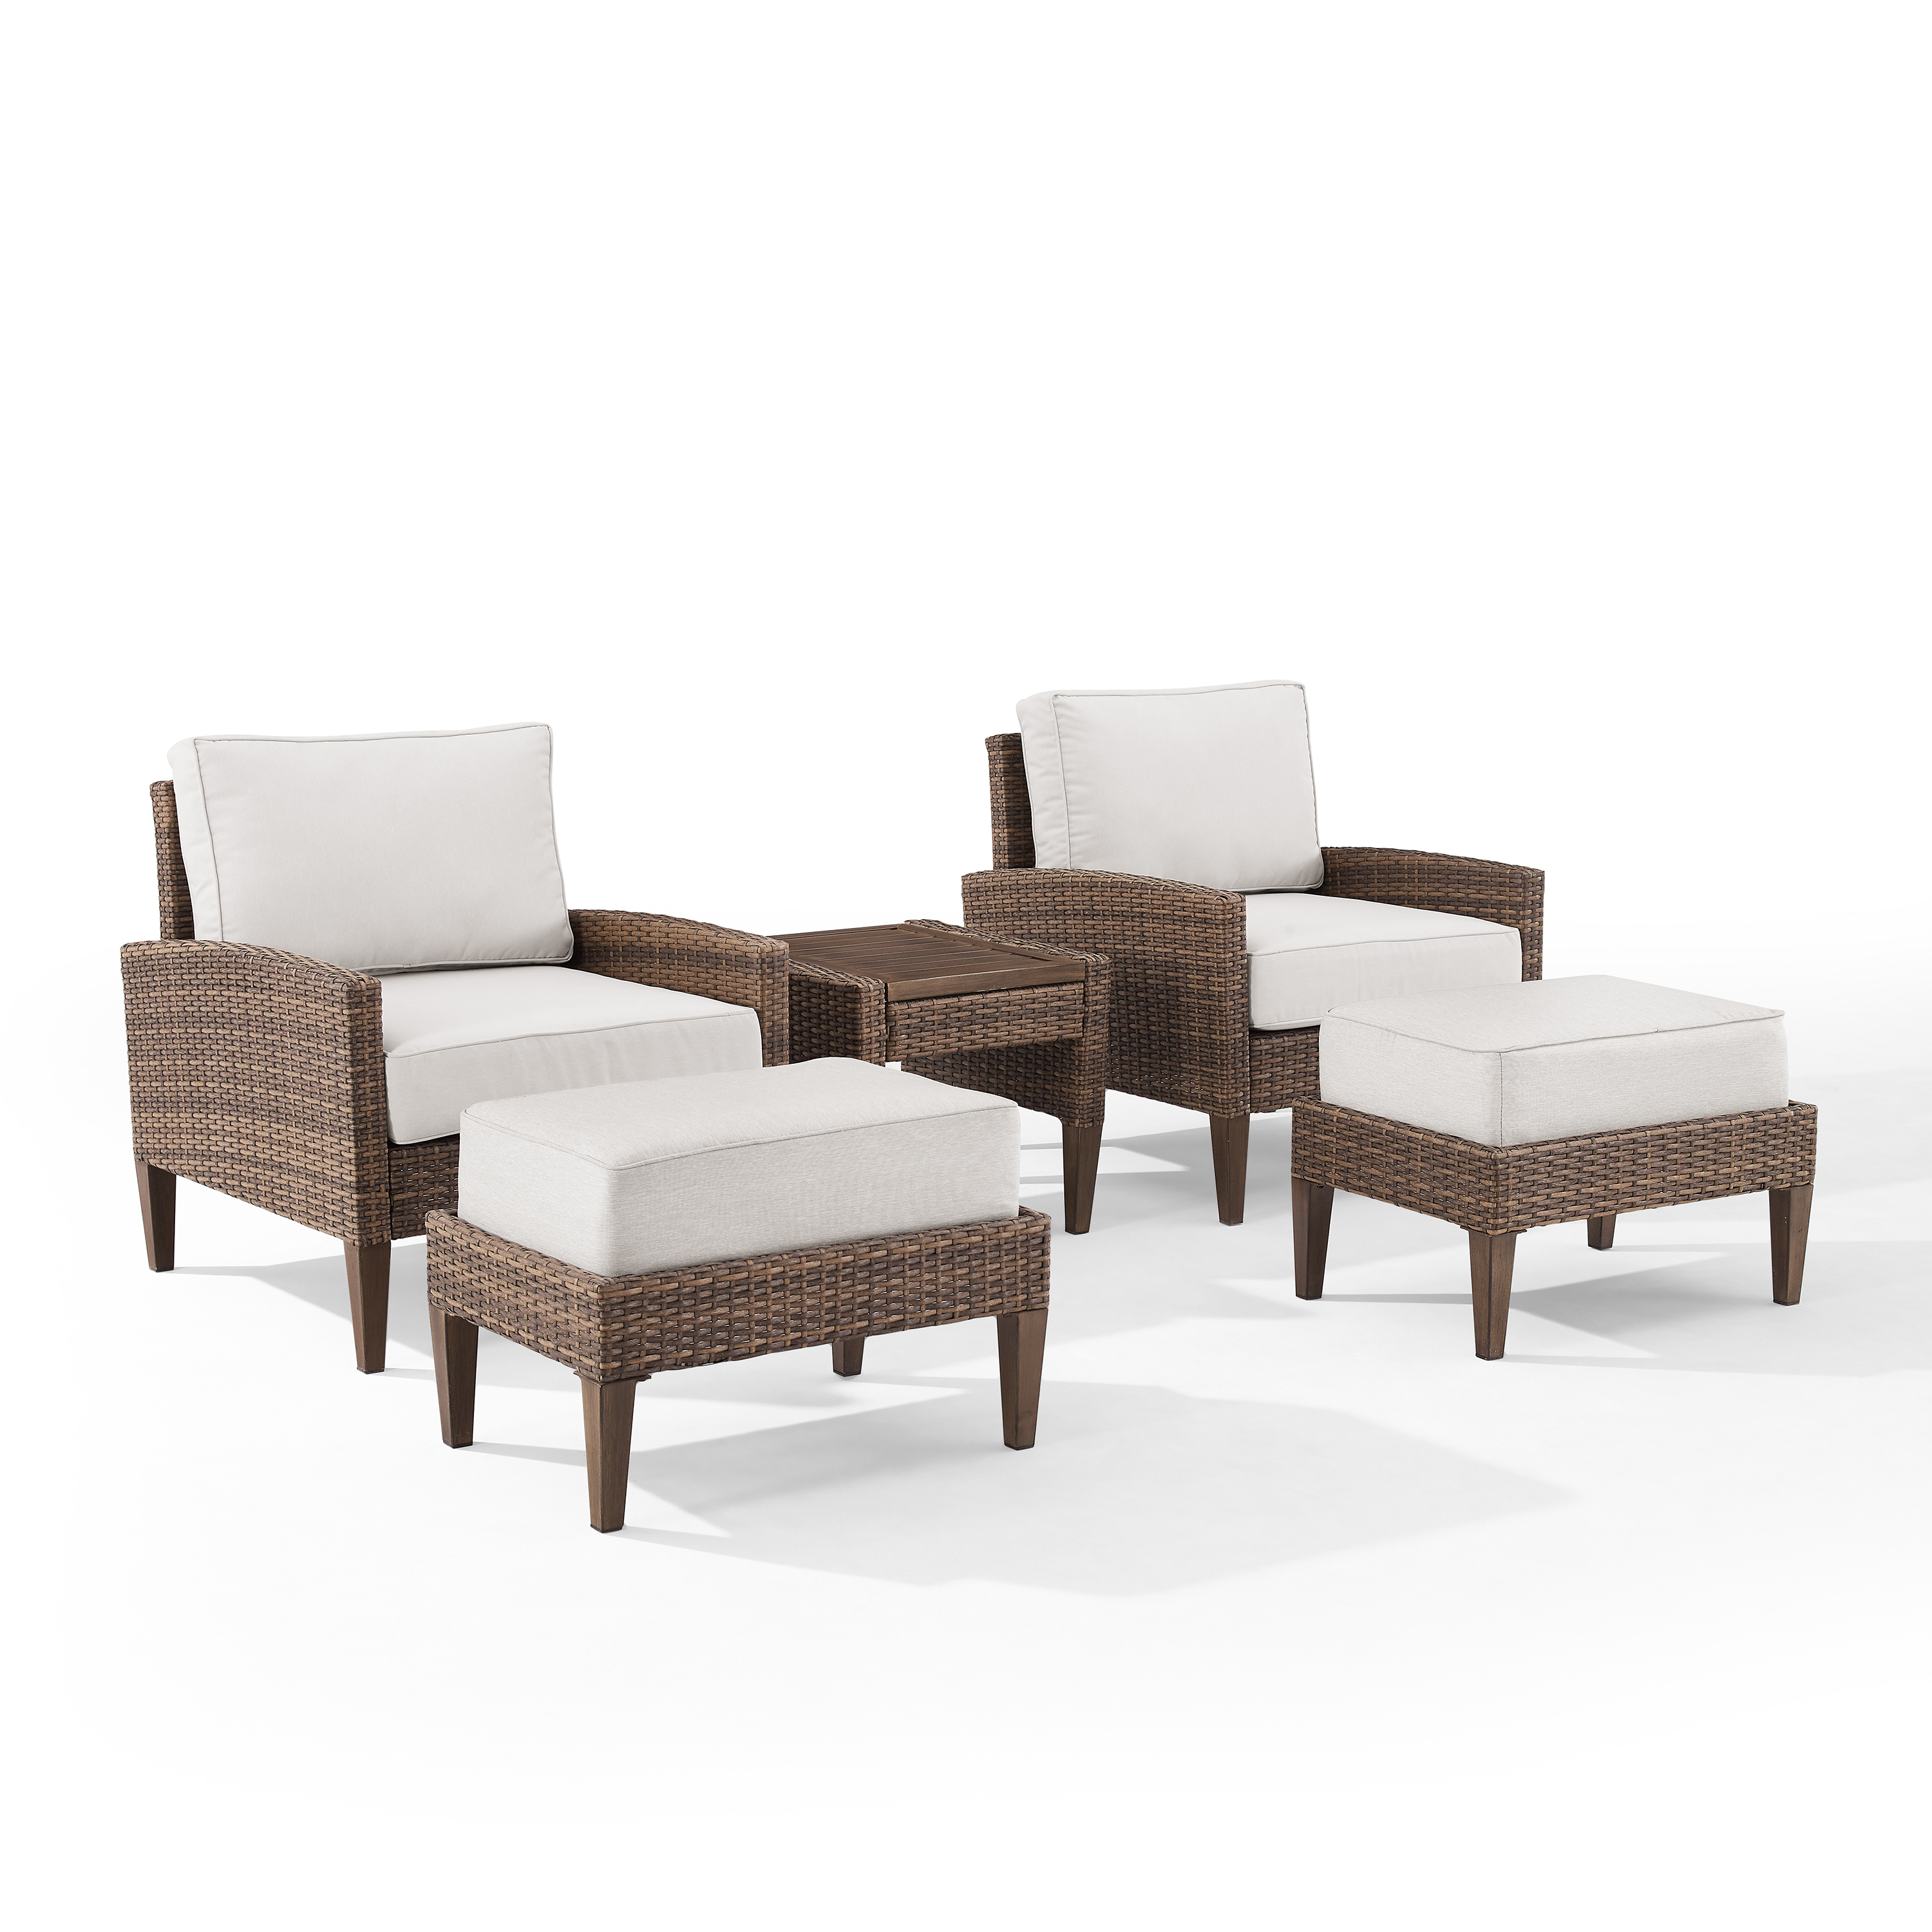 Crosley Furniture Capella 5-Piece PE Wicker / Rattan Outdoor Chair Set in Brown - image 1 of 6